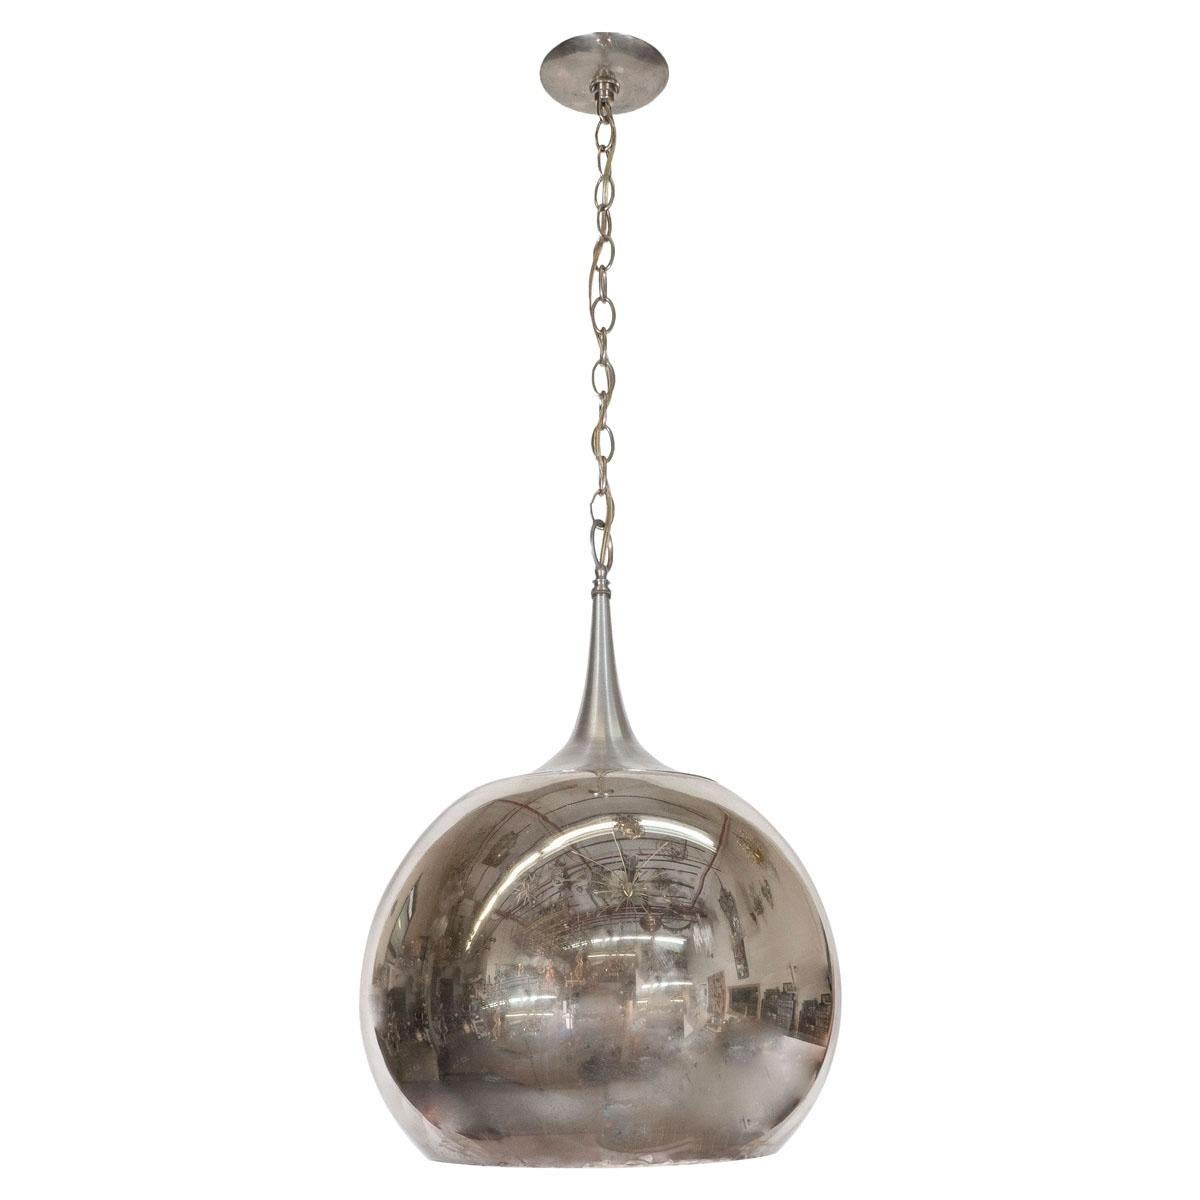 Space-age mercury glass bulb form pendant.